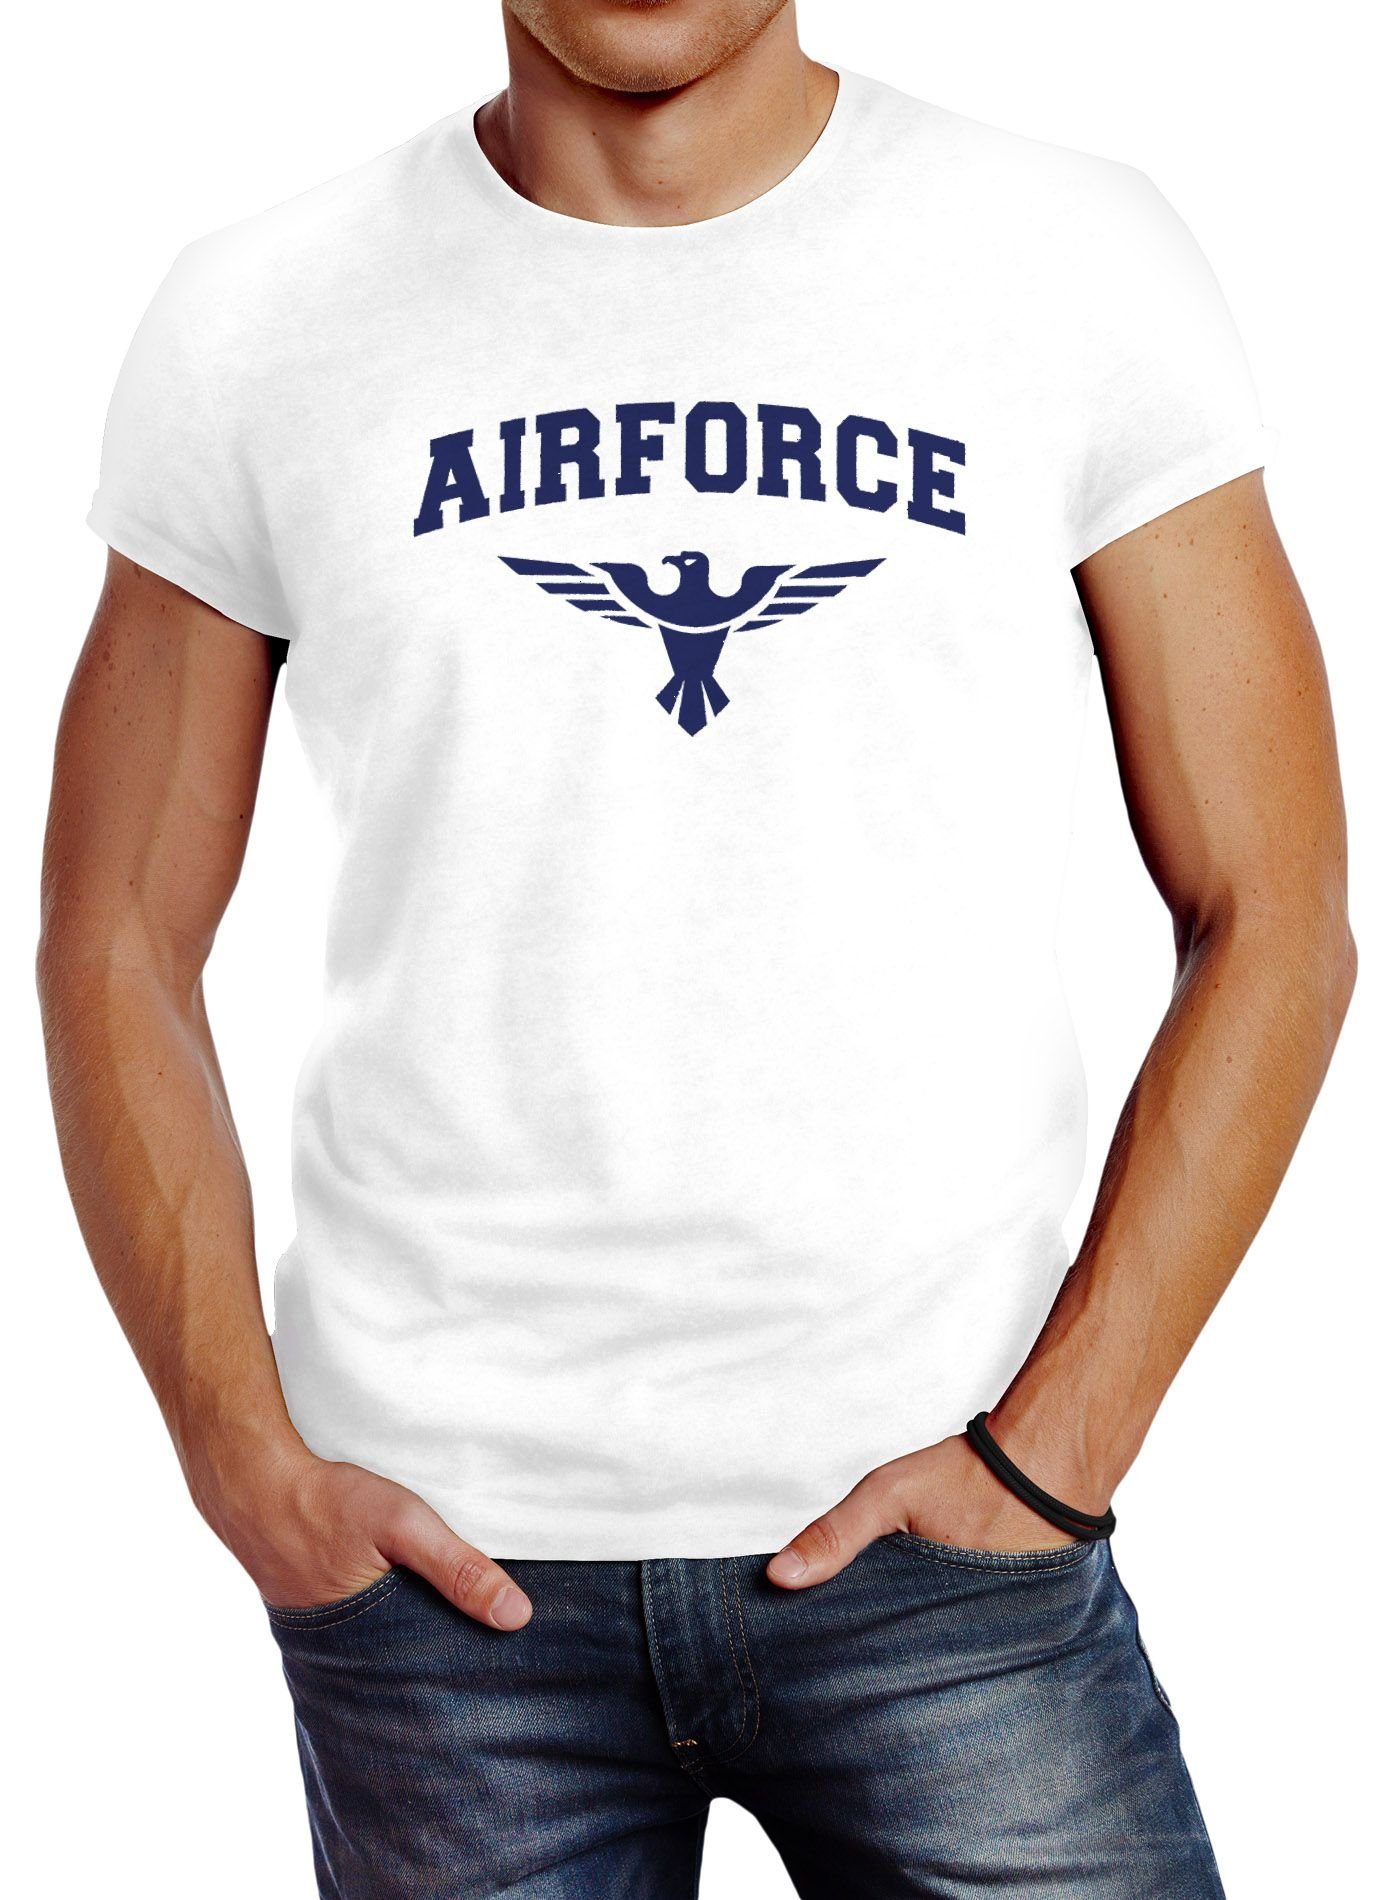 Neverless Print-Shirt Neverless® Herren T-Shirt Airforce US Army Adler Militär T-Shirt Fashion Streetstyle mit Print weiß